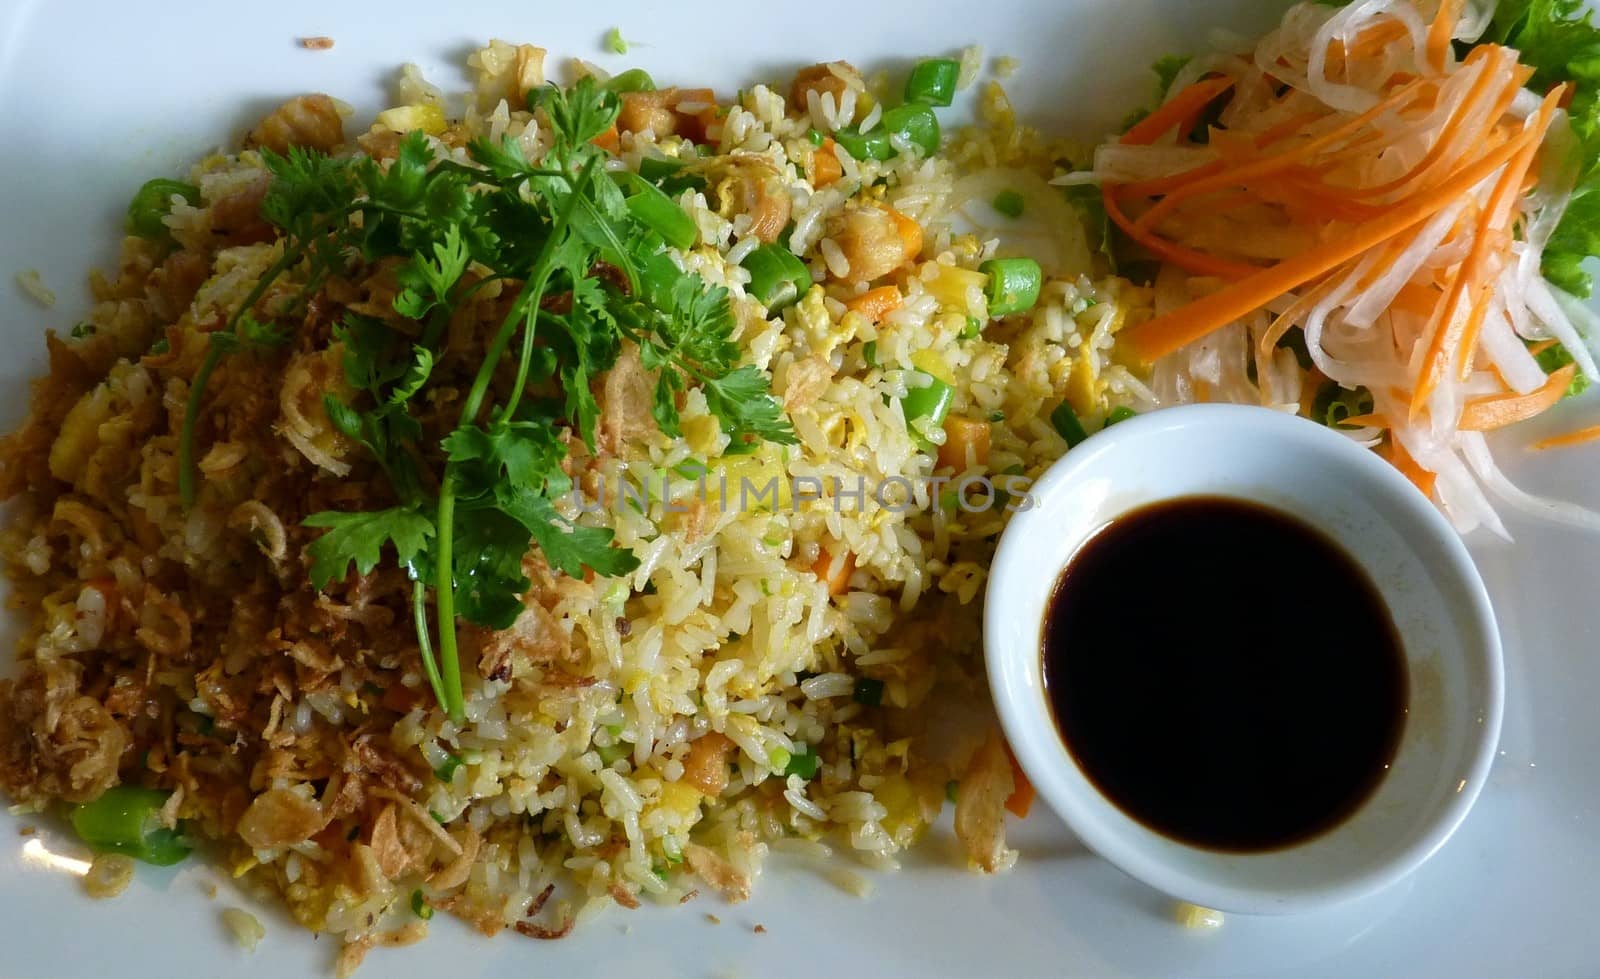 Delicious Vietnamese Stir-Fried Rice by nicousnake